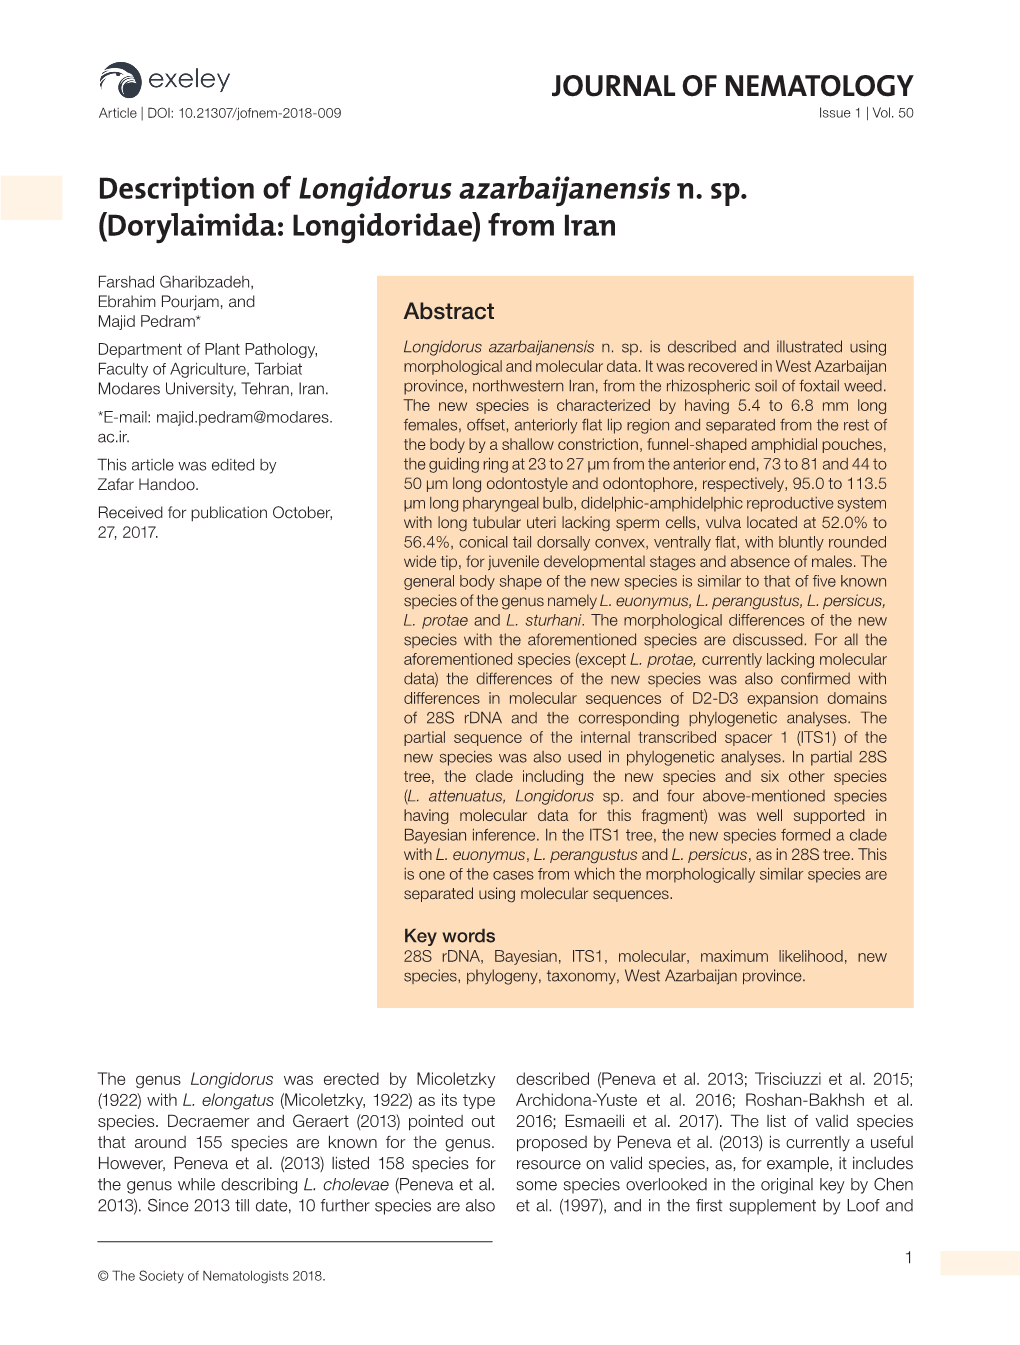 JOURNAL of NEMATOLOGY Description of Longidorus